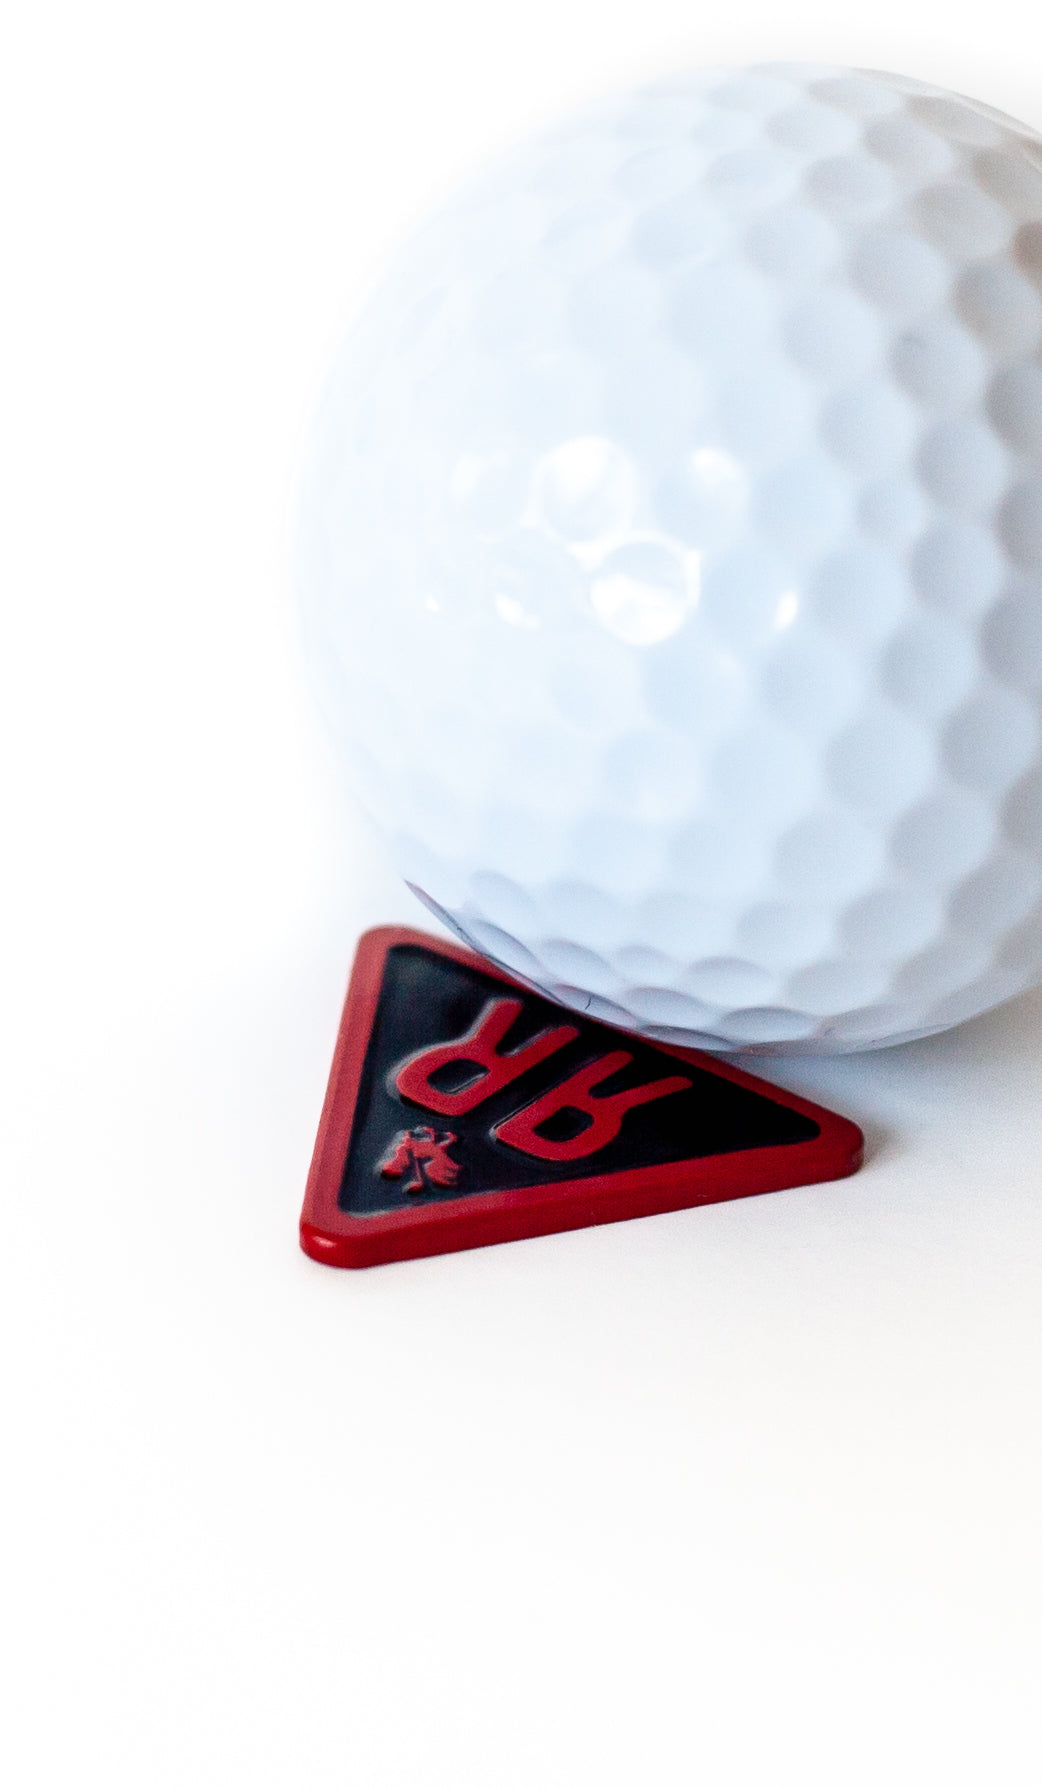 The Acute ball marker with golf ball closeup